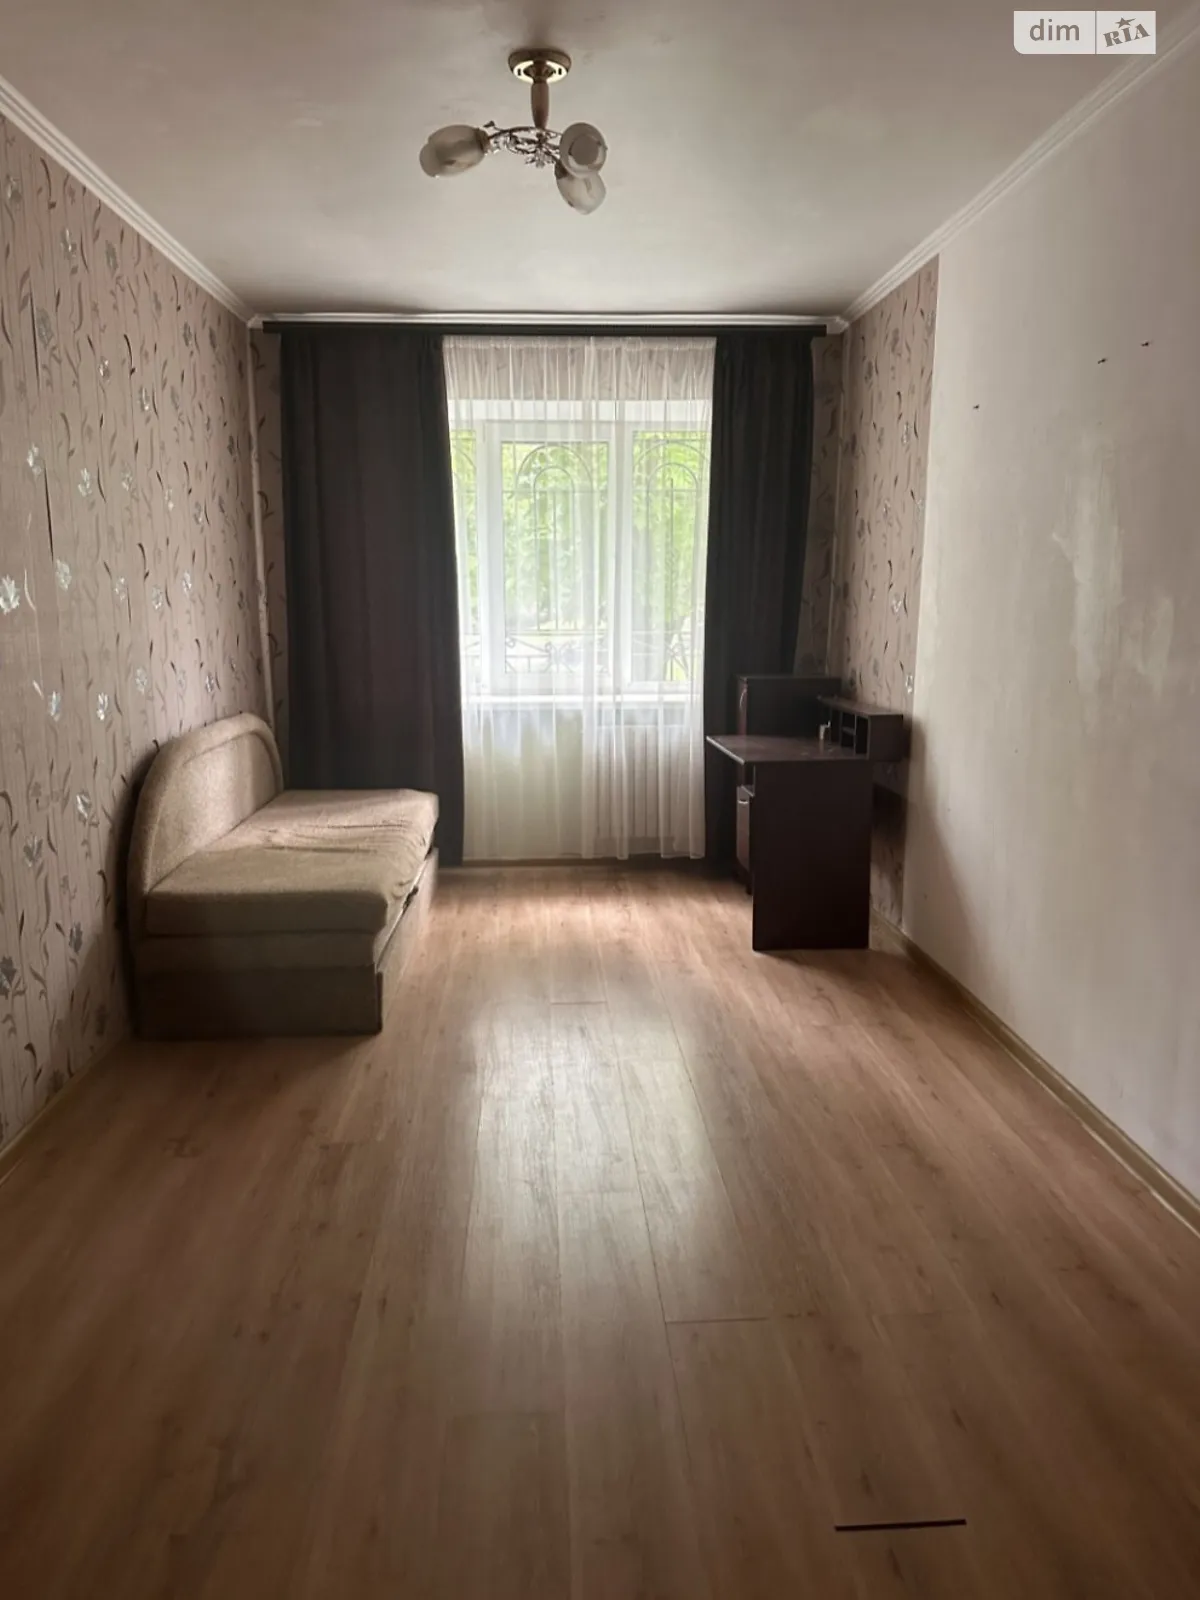 Продается комната 45 кв. м в Одессе, цена: 10500 $ - фото 1